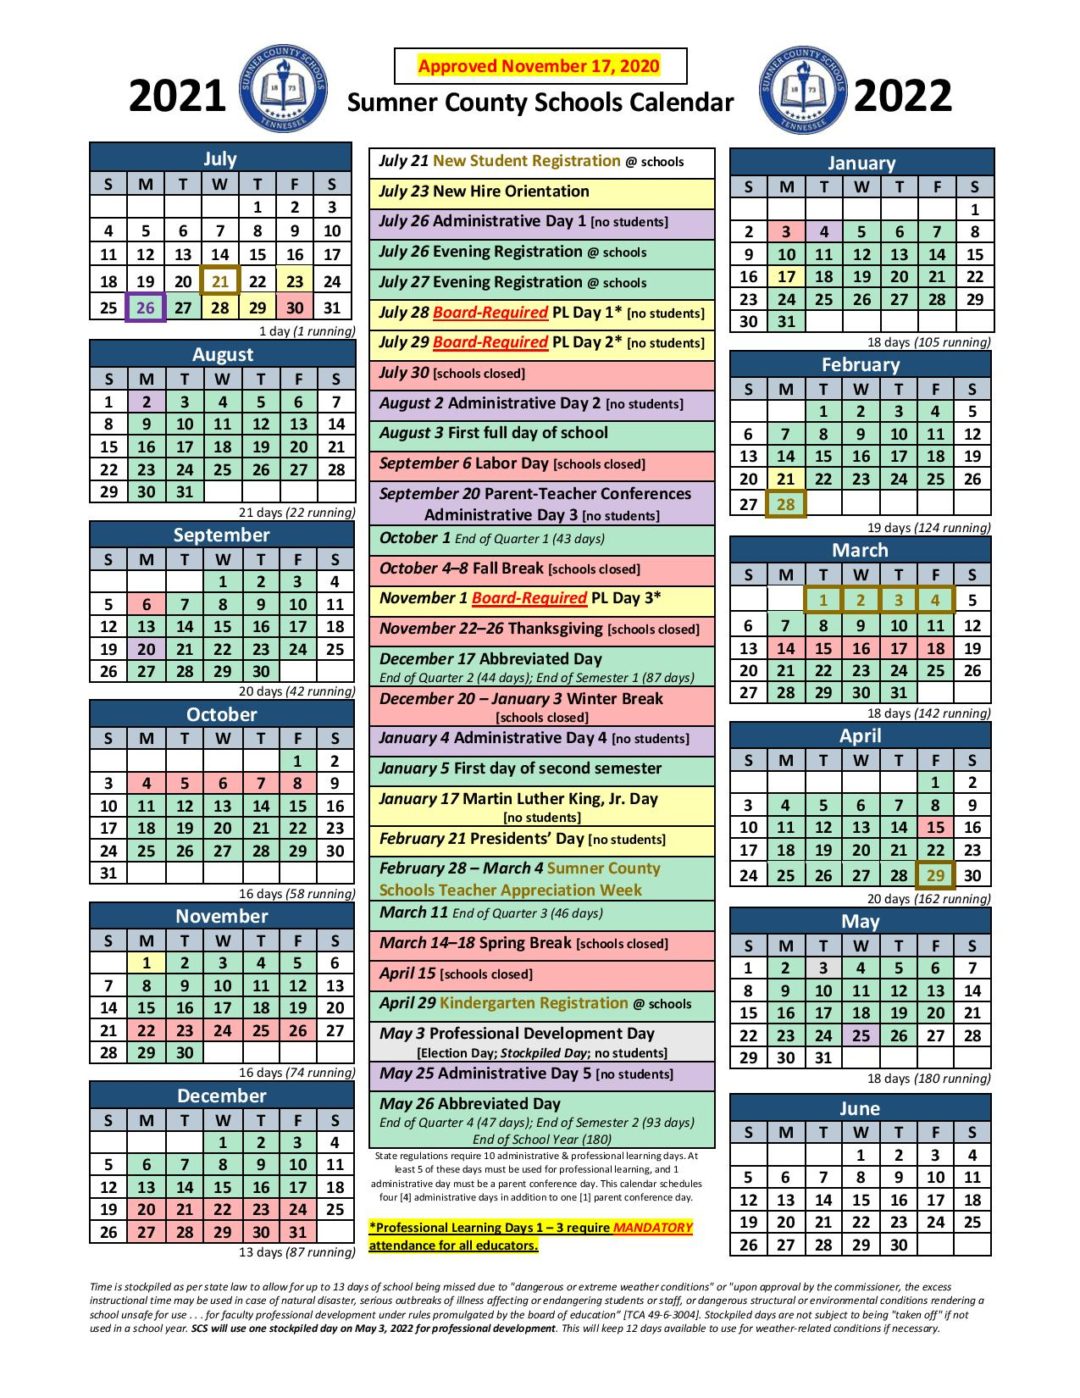 Sumner County School Calendar Holidays 2021 2022 Free HotPorn